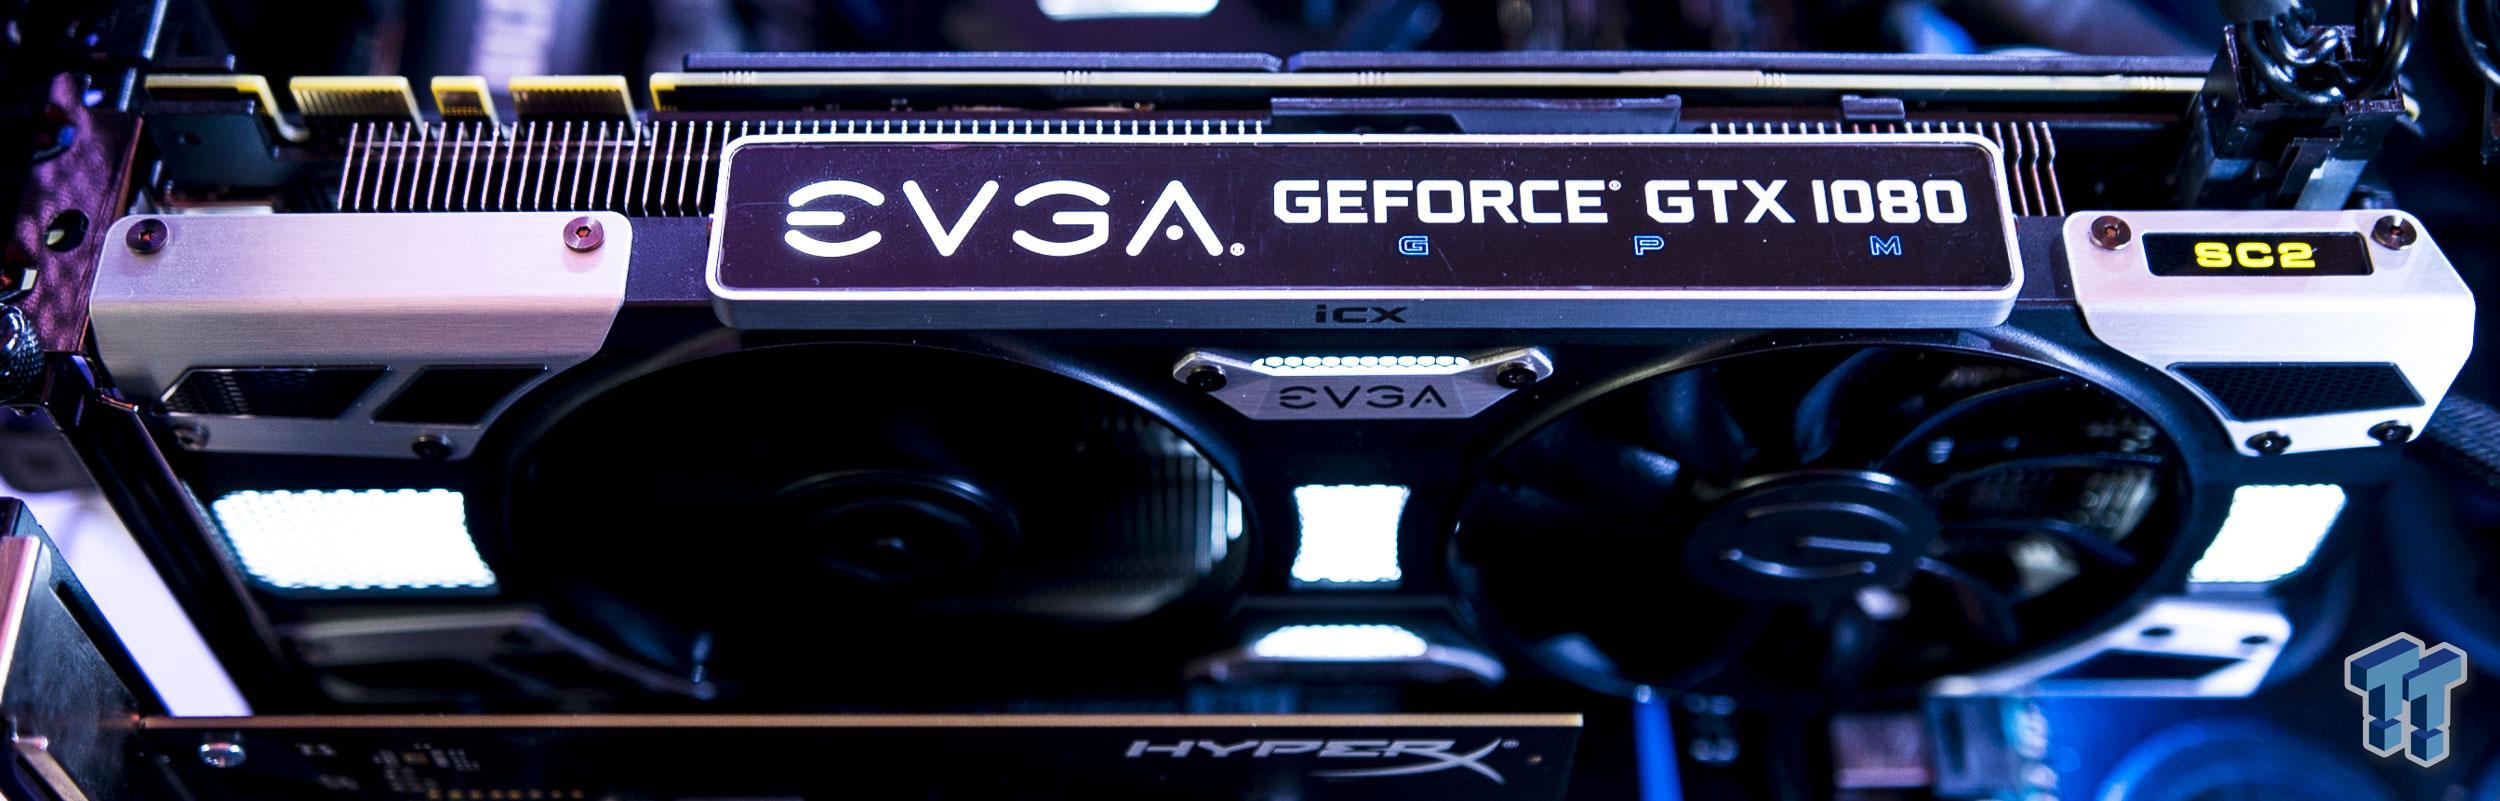 EVGA GeForce GTX 1080 SuperClocked 2 